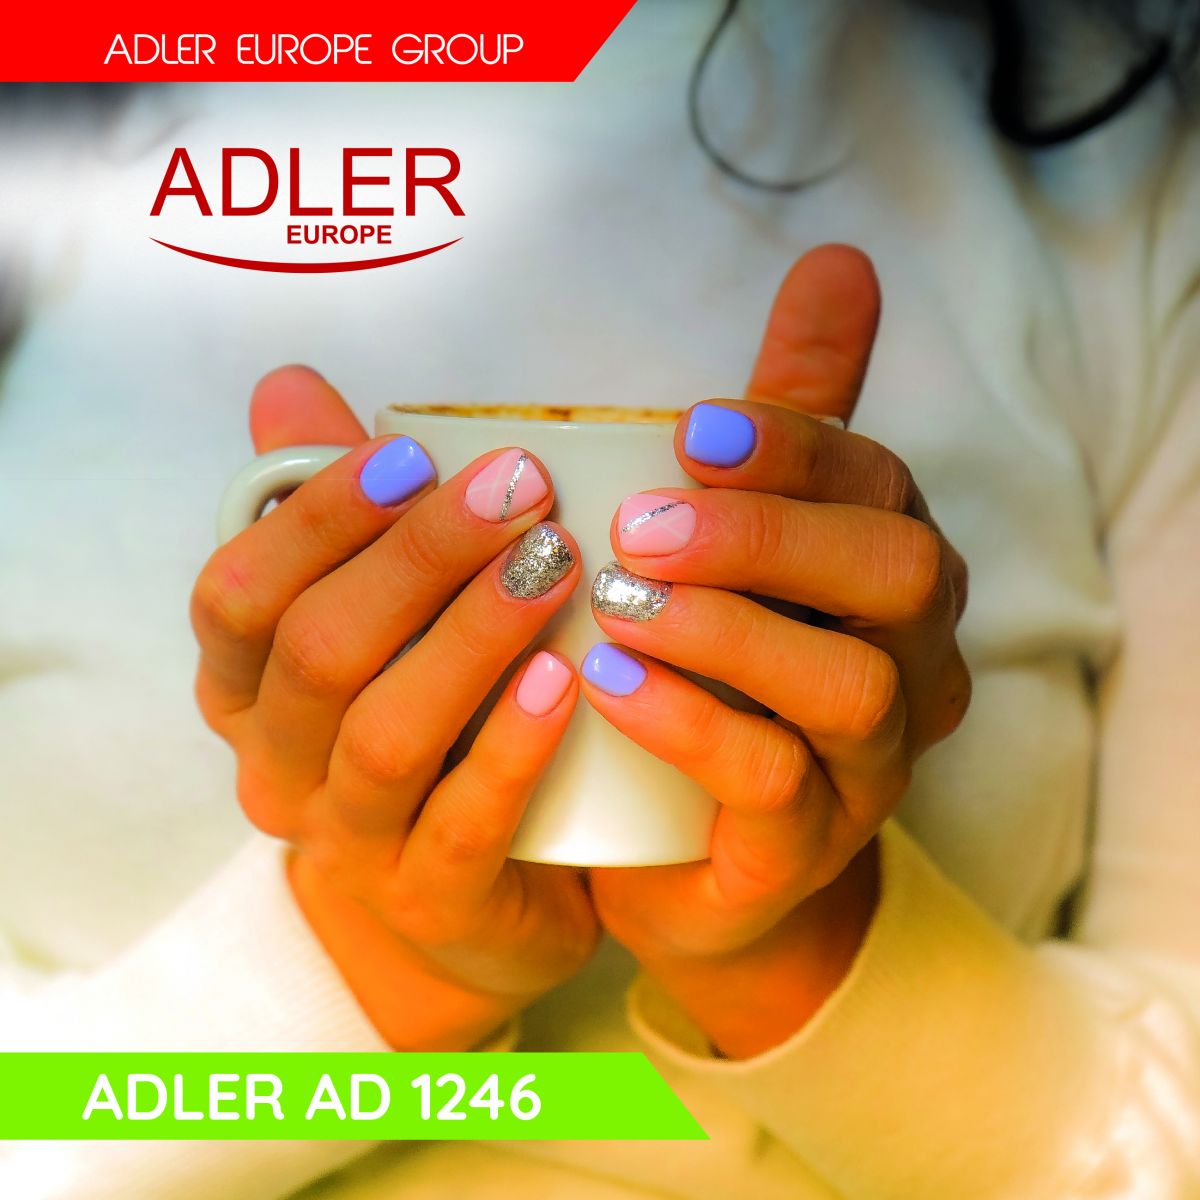 Adler AD 1246 Kettle 1.8 l